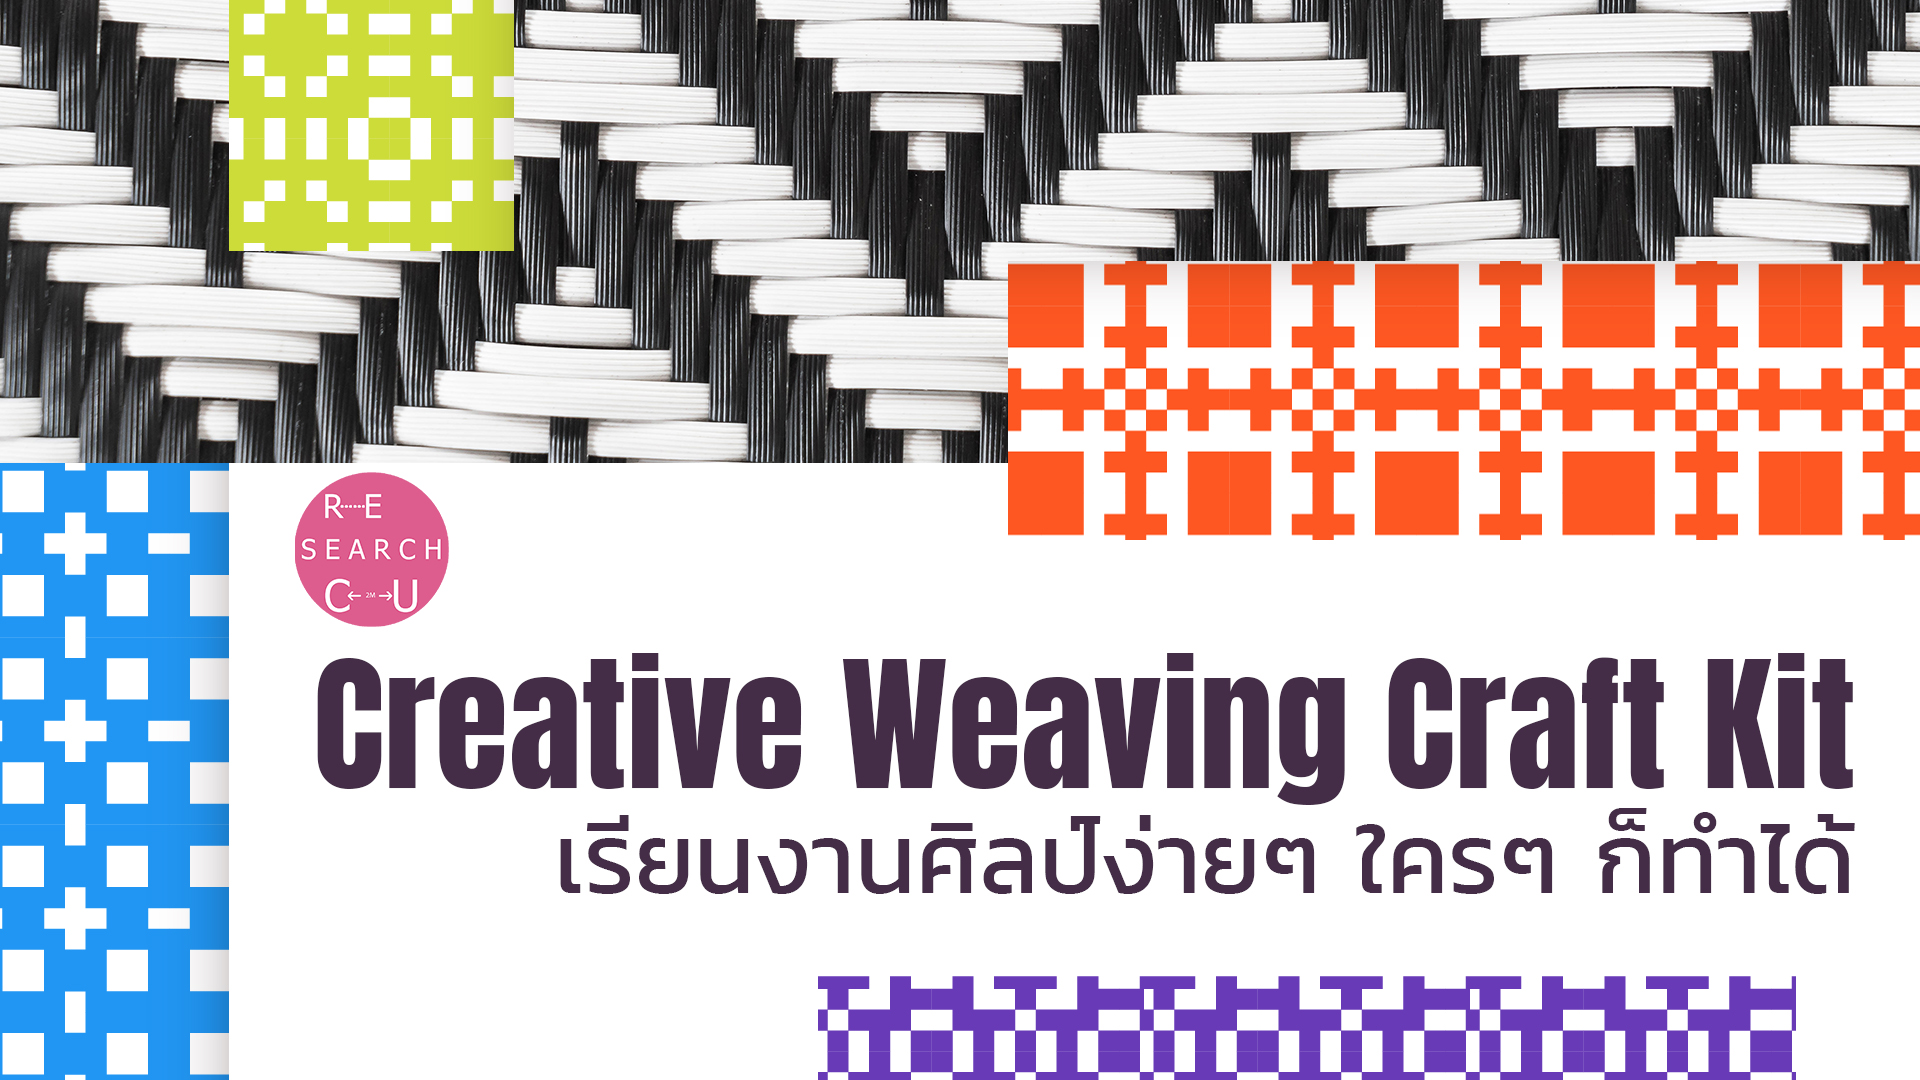 Creative Weaving Craft Kit เรียนงานศิลป์ง่ายๆ ใครๆ ก็ทำได้